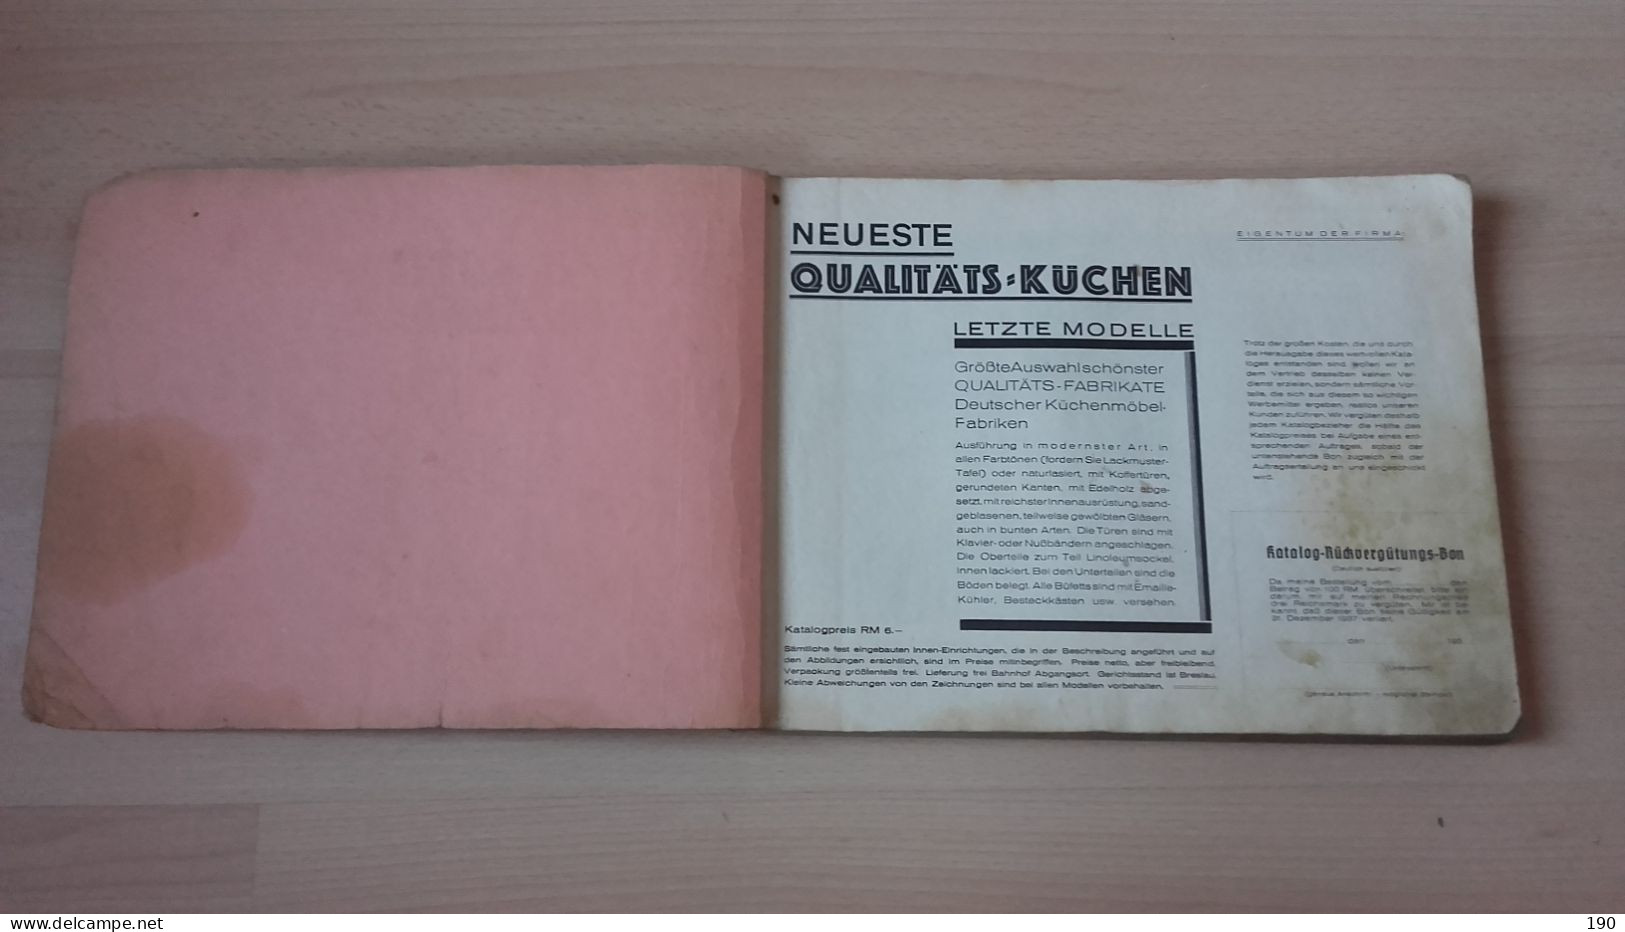 Carton Catalogue/catalog Of Furniture.Katalog Der Mobel.Besonders Schone Modelle Qualitats Kuchen - Oude Boeken